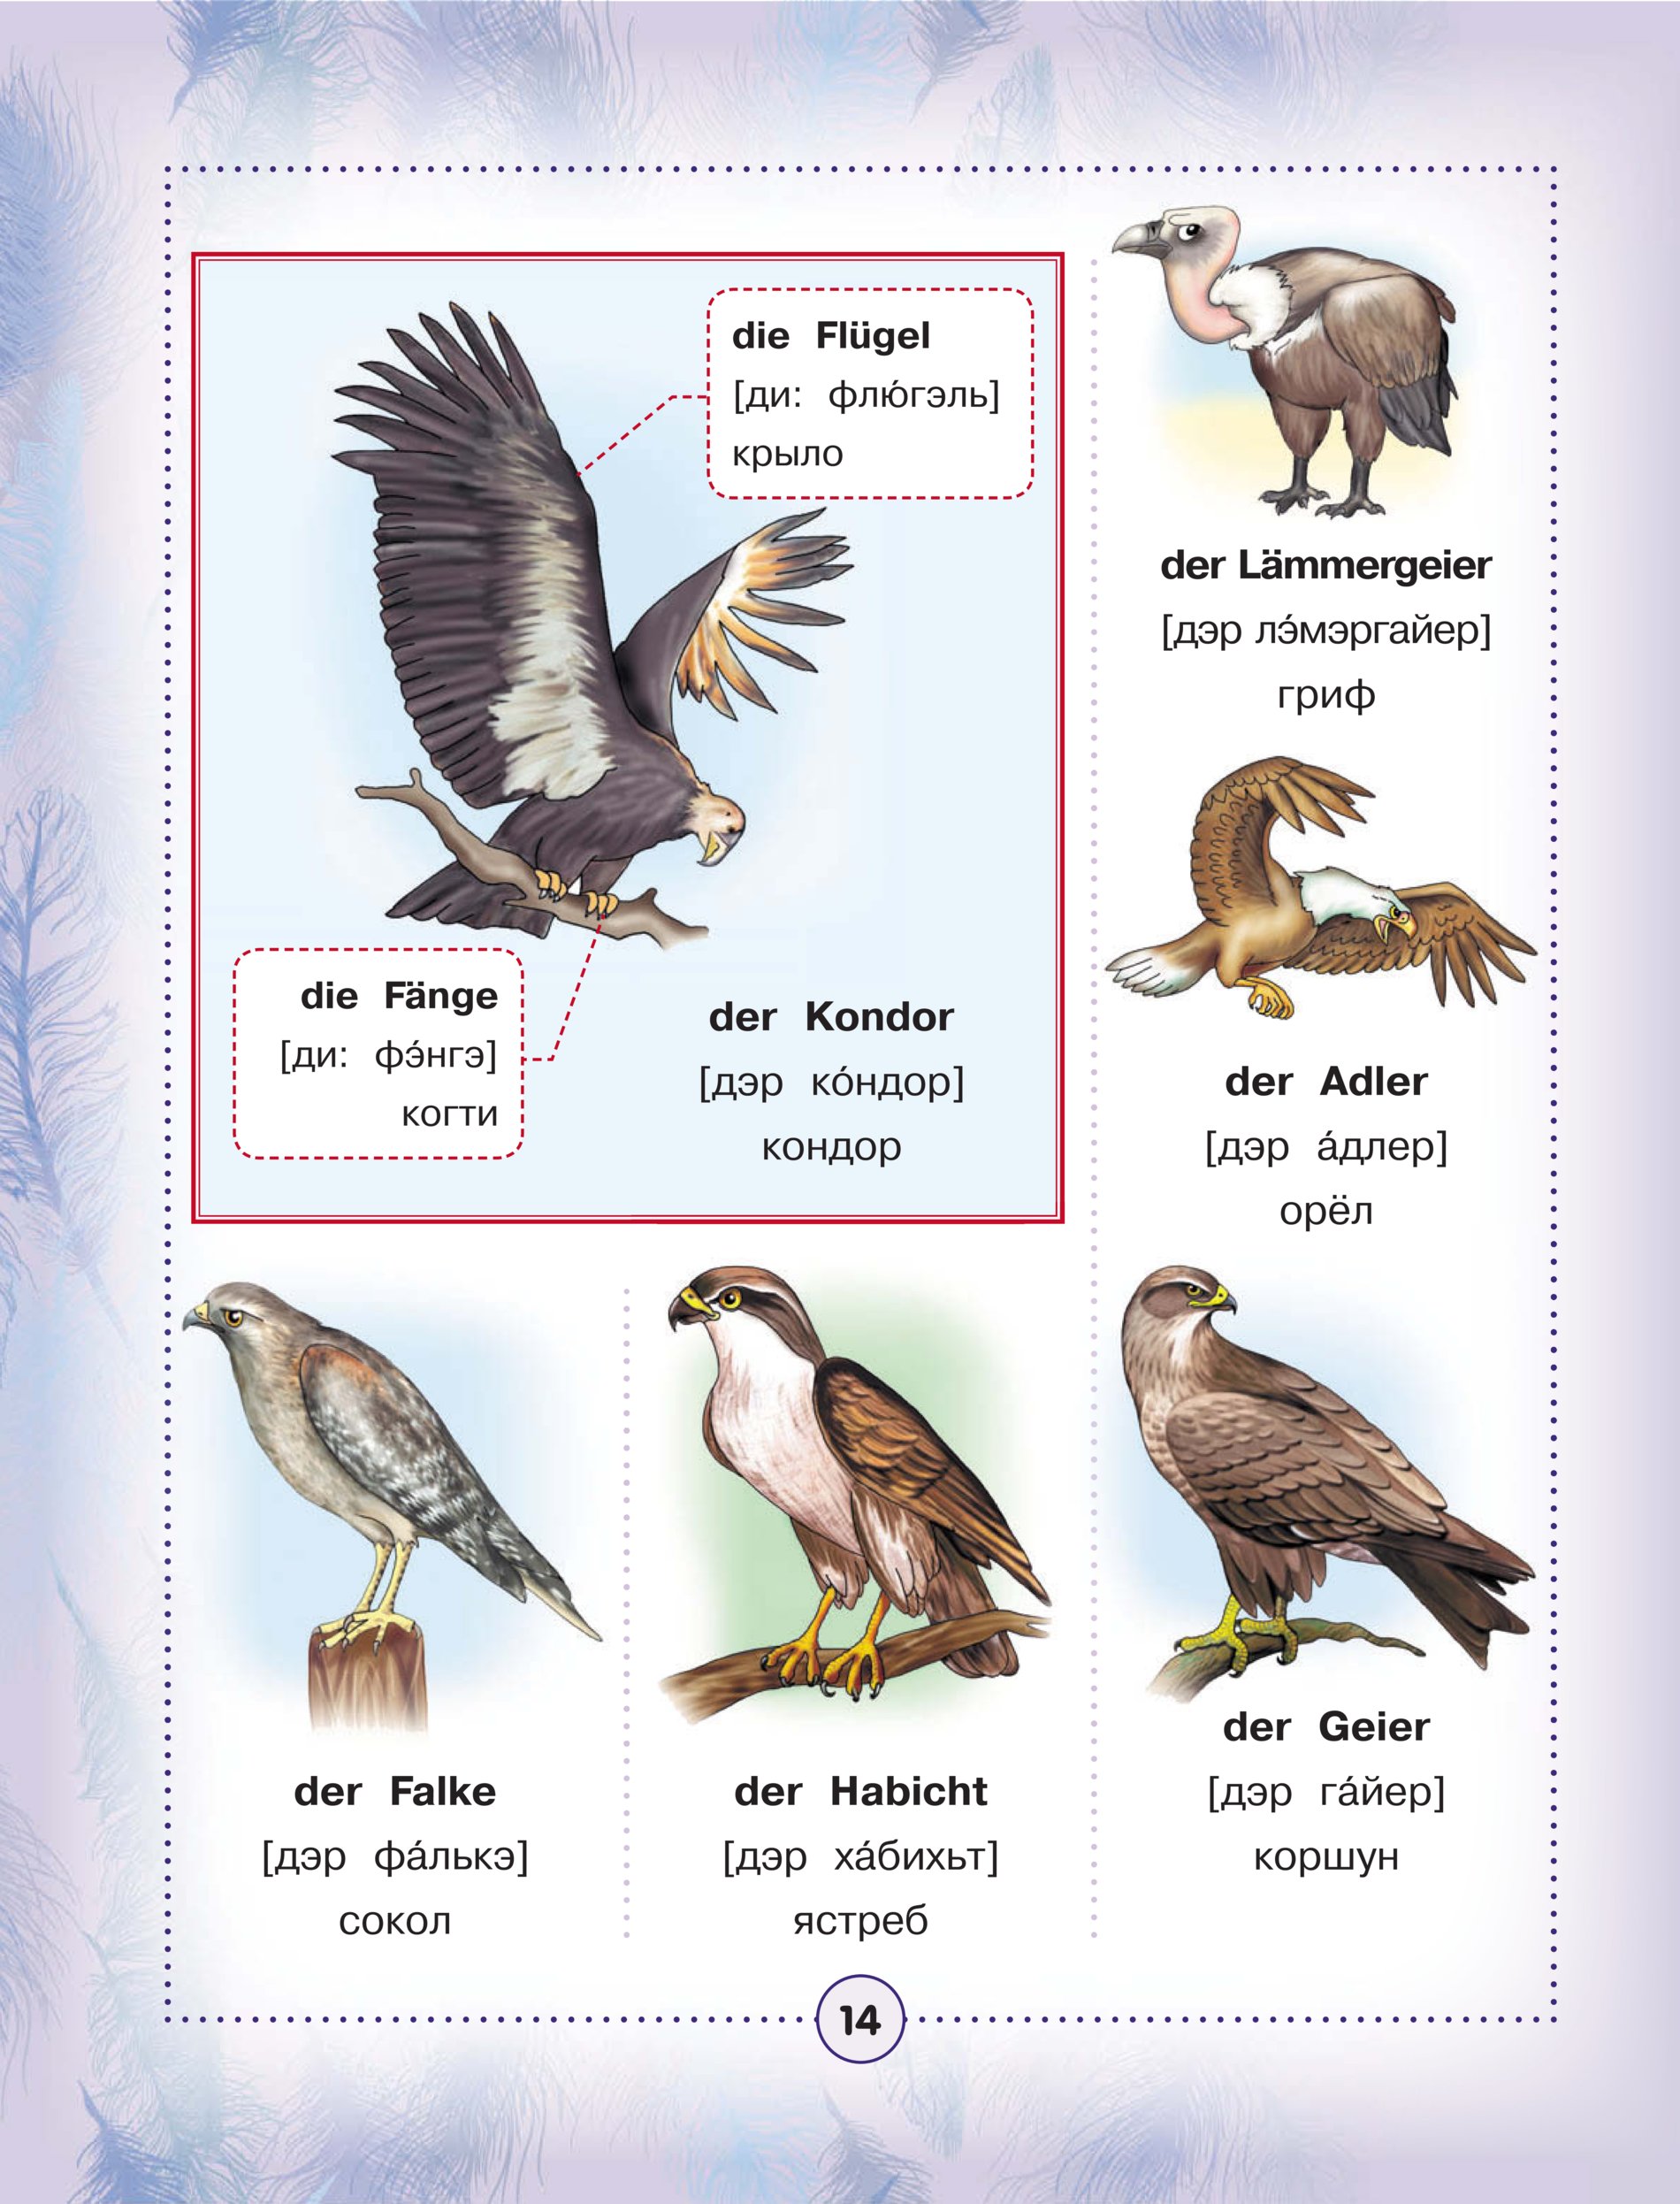 Перевести птиц на английский. Птицы на английском. Названия птиц на английском. Птицы на английском языке для детей. Названия птиц на англи.